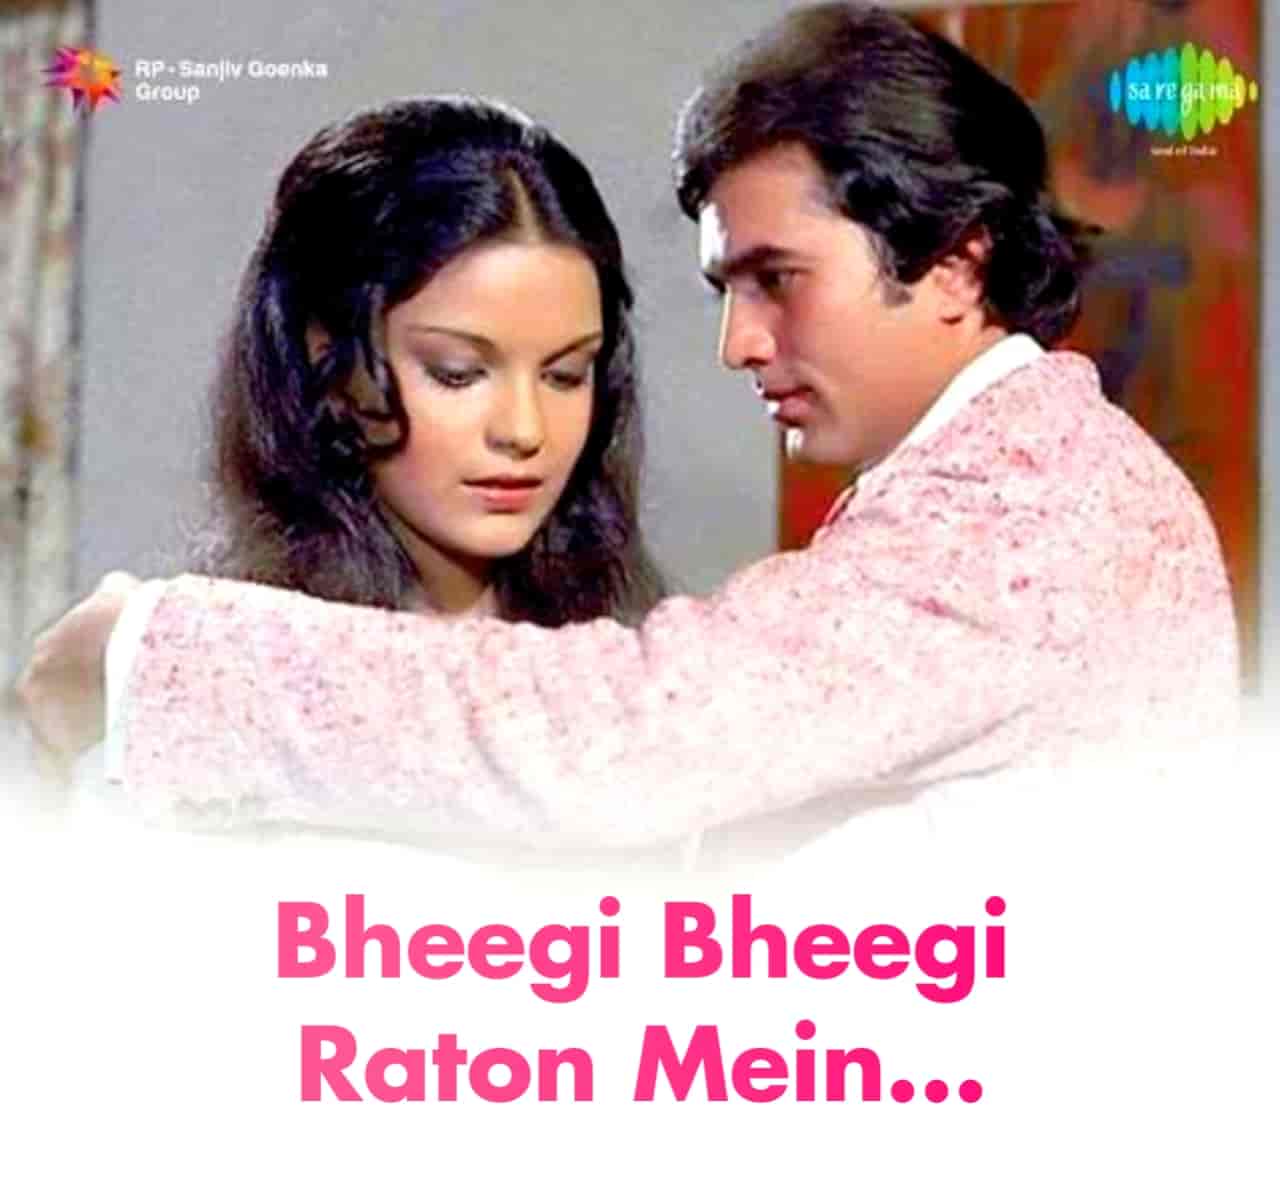 Bheegi Bheegi Raton Mein Hindi Romantic Song Lyrics, Sung By Kishor Kumar & Lata Mangeshkar.